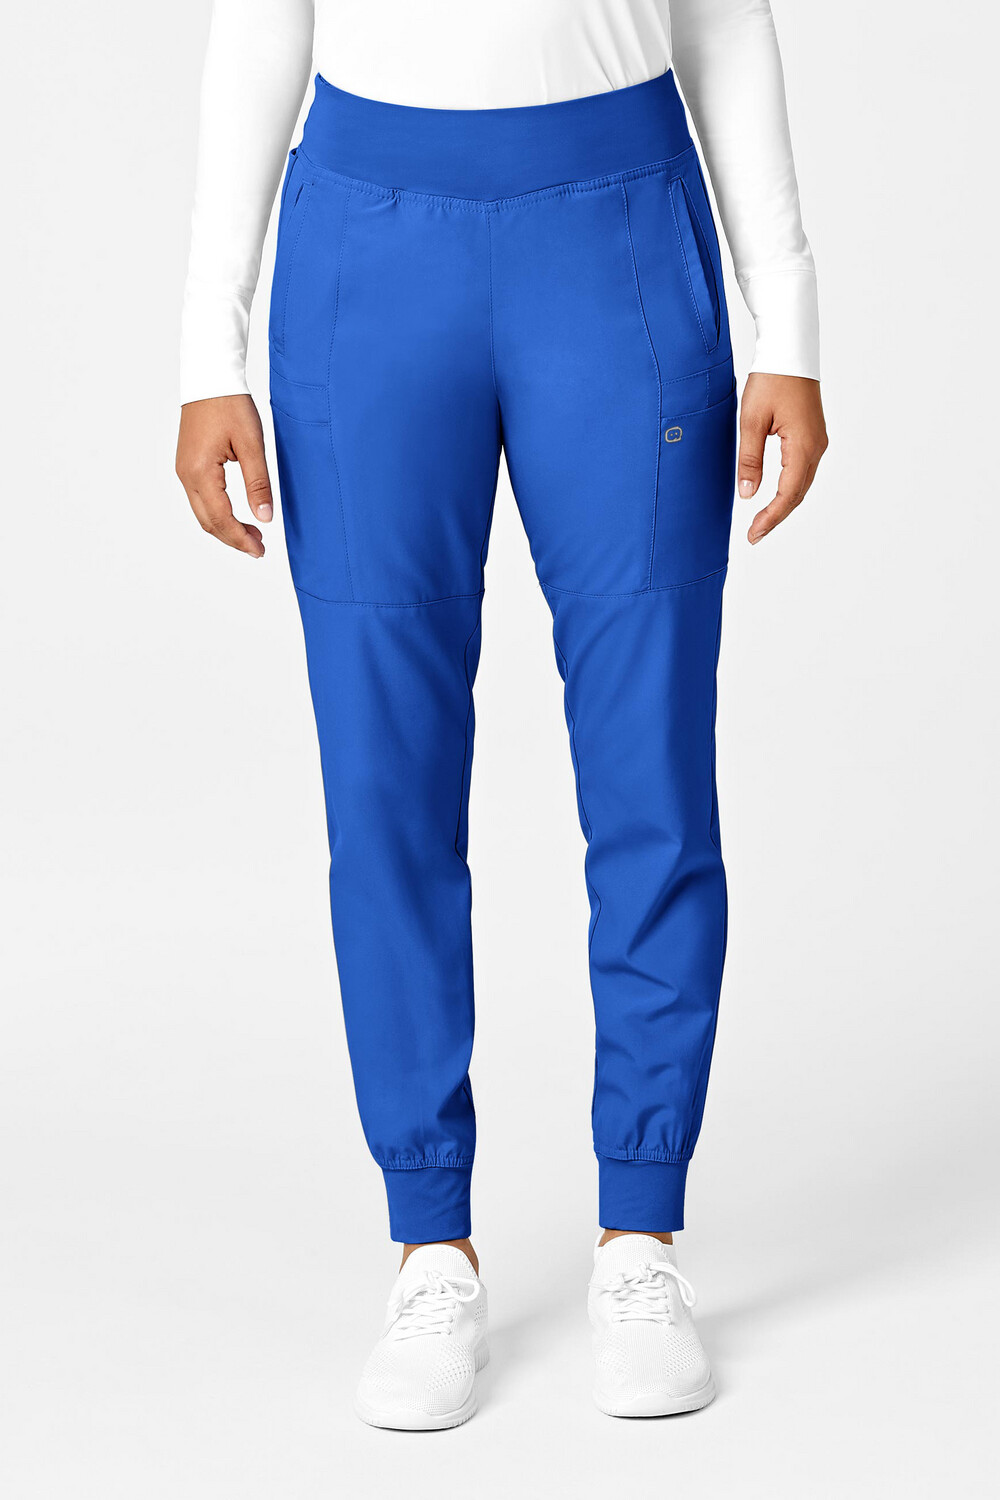 Pantalone donna 5555 cargo jogger royal blue